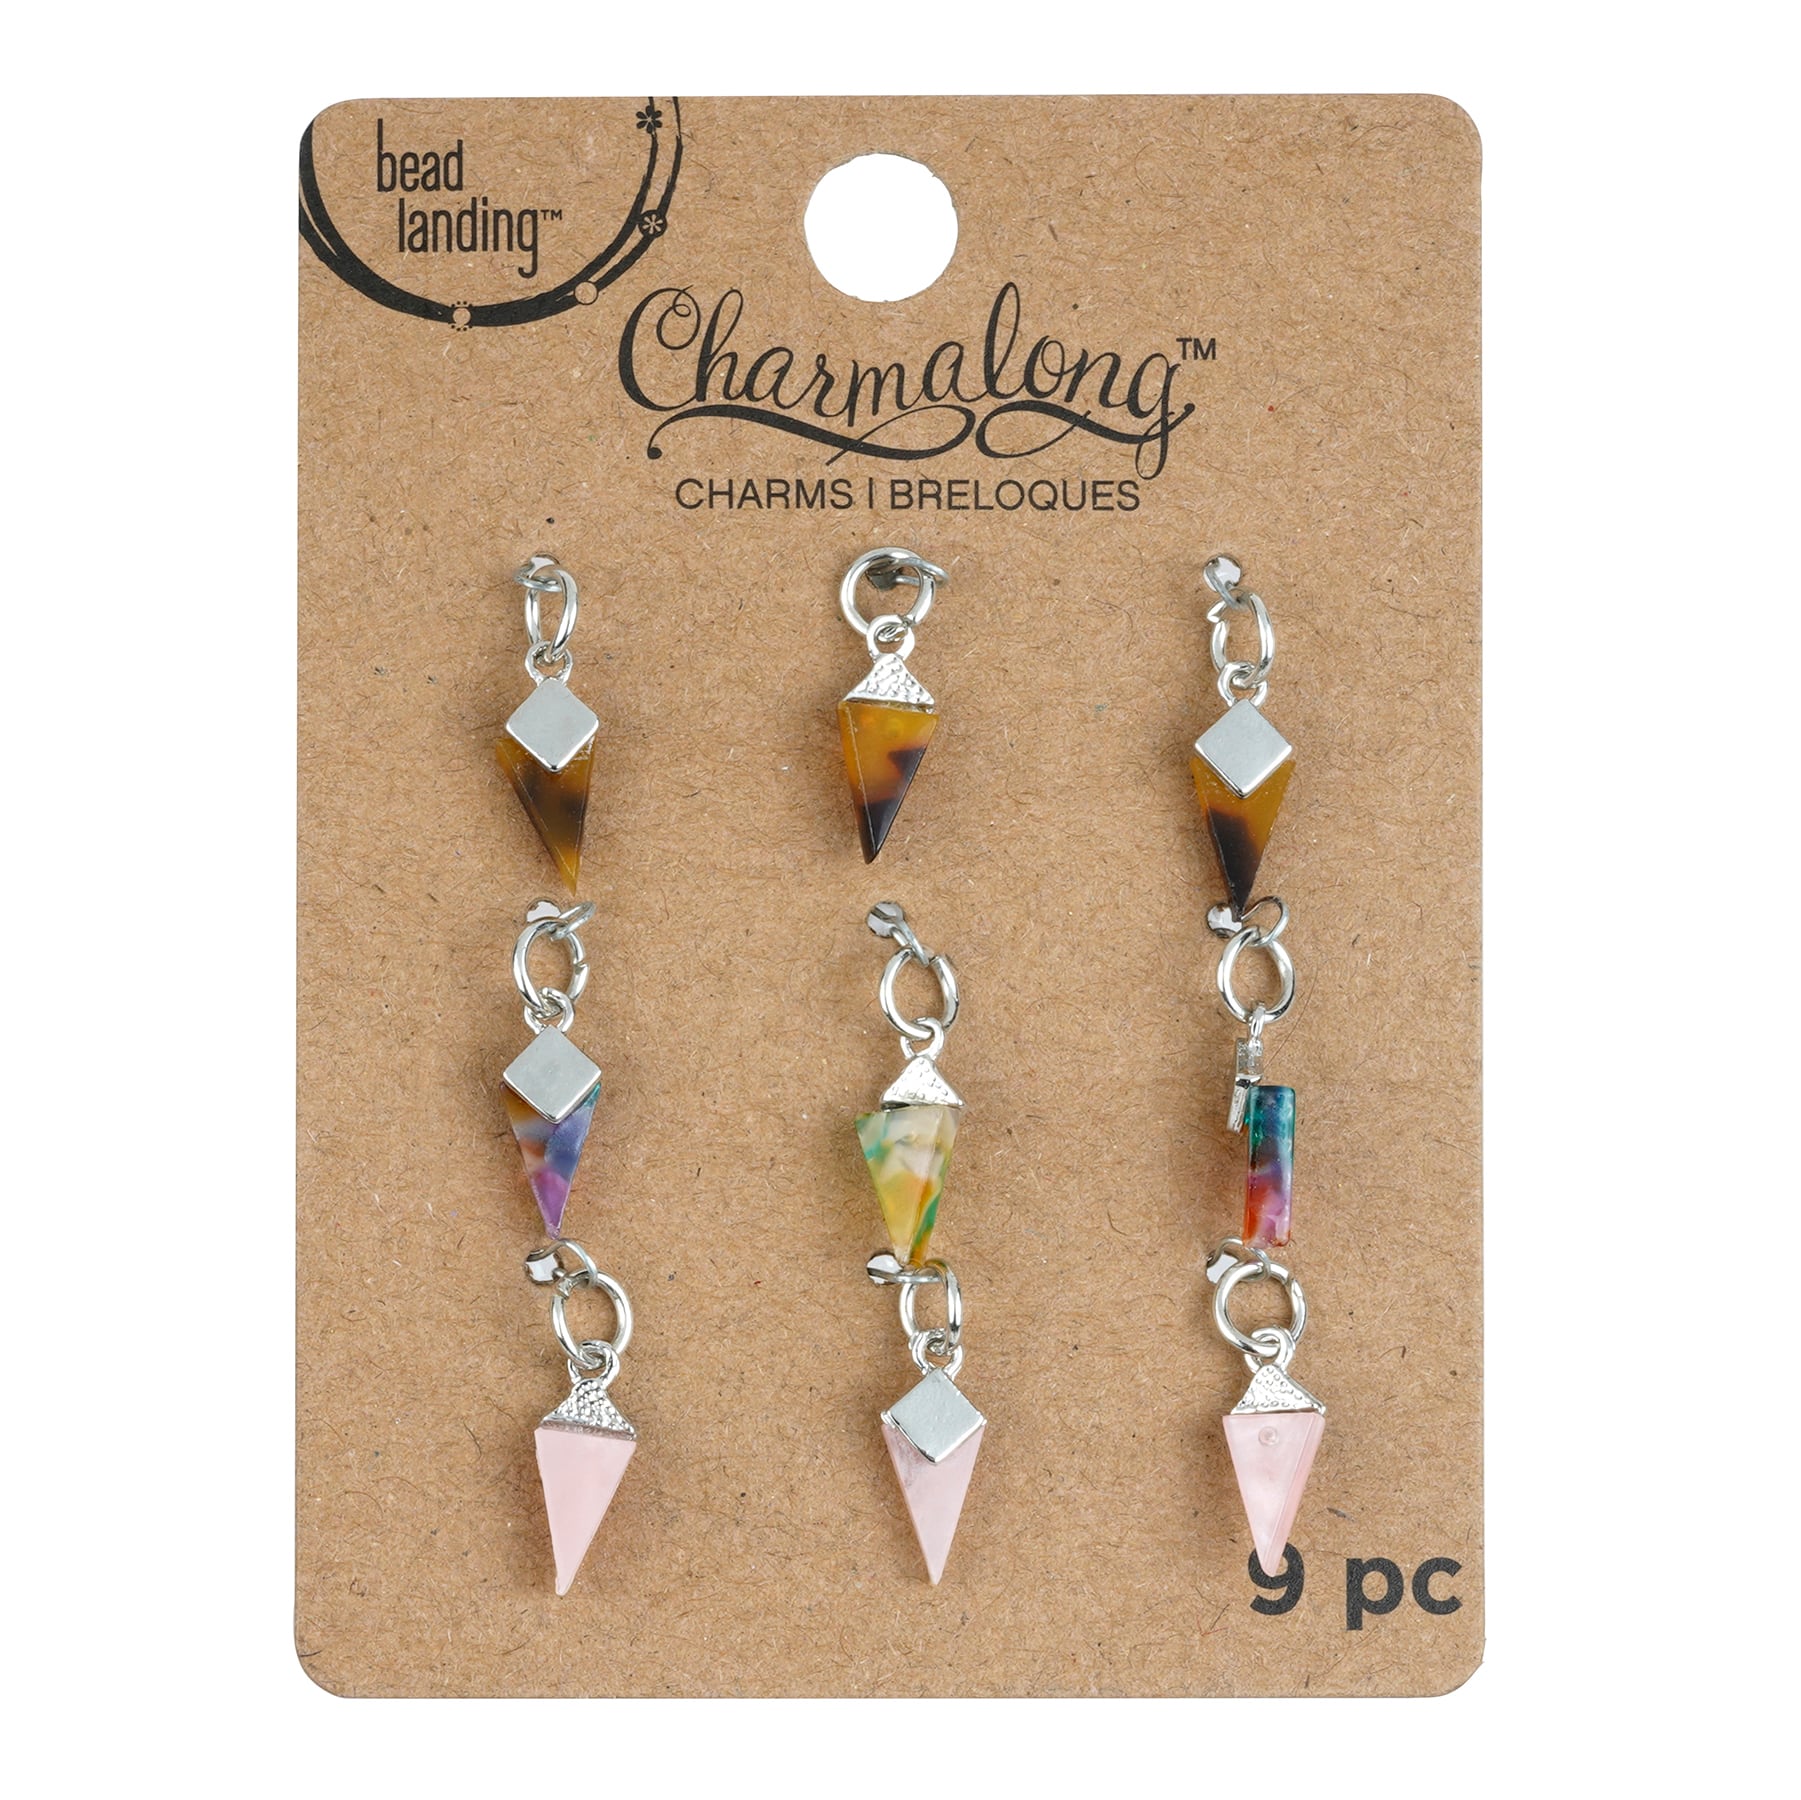 Charmalong&#x2122; Triangle Charms by Bead Landing&#x2122;